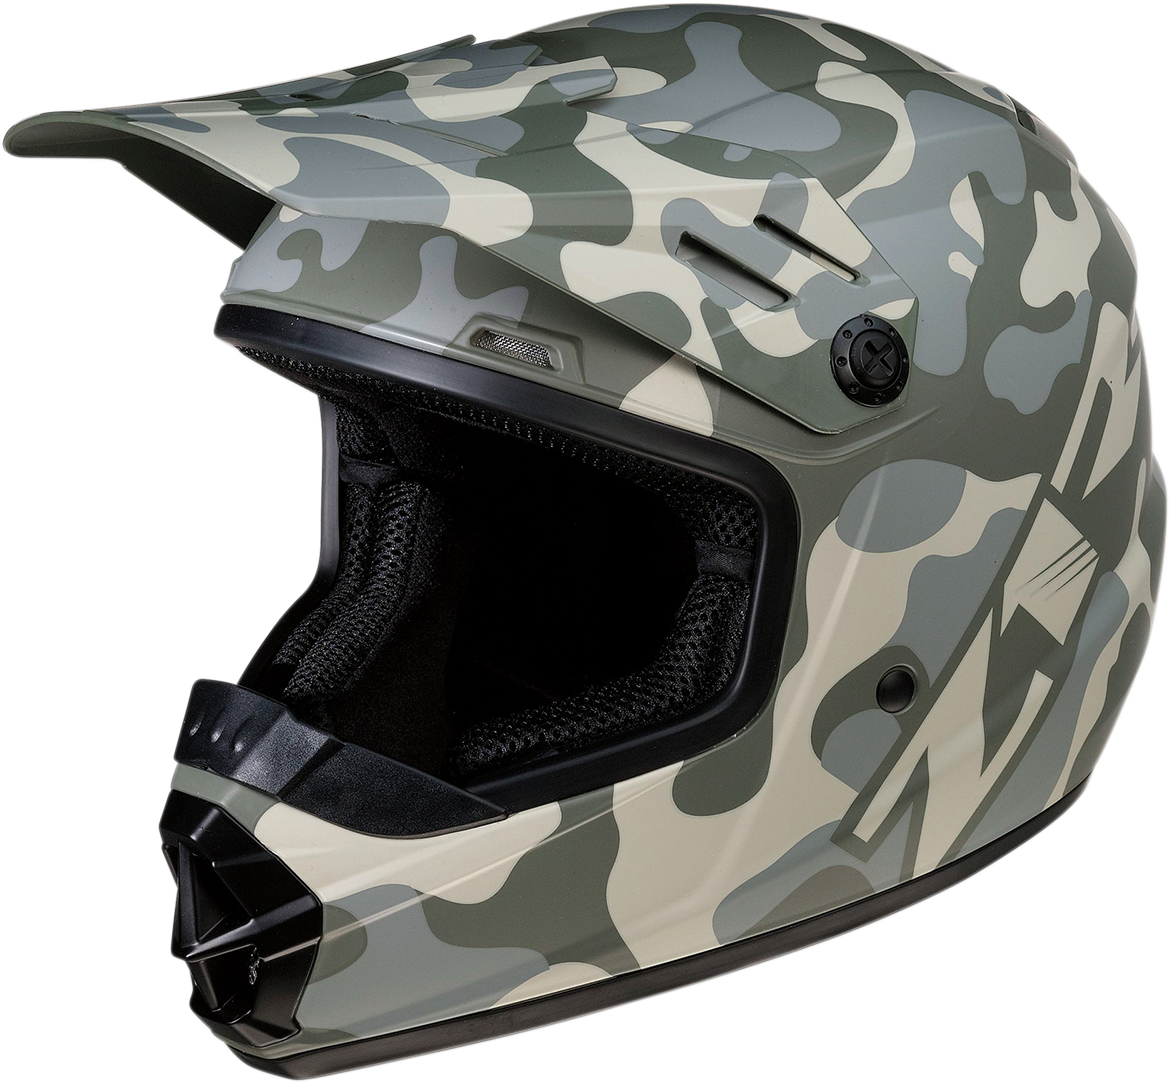 Z1R Youth Rise Helmet - Camo - Desert - Medium 0111-1262